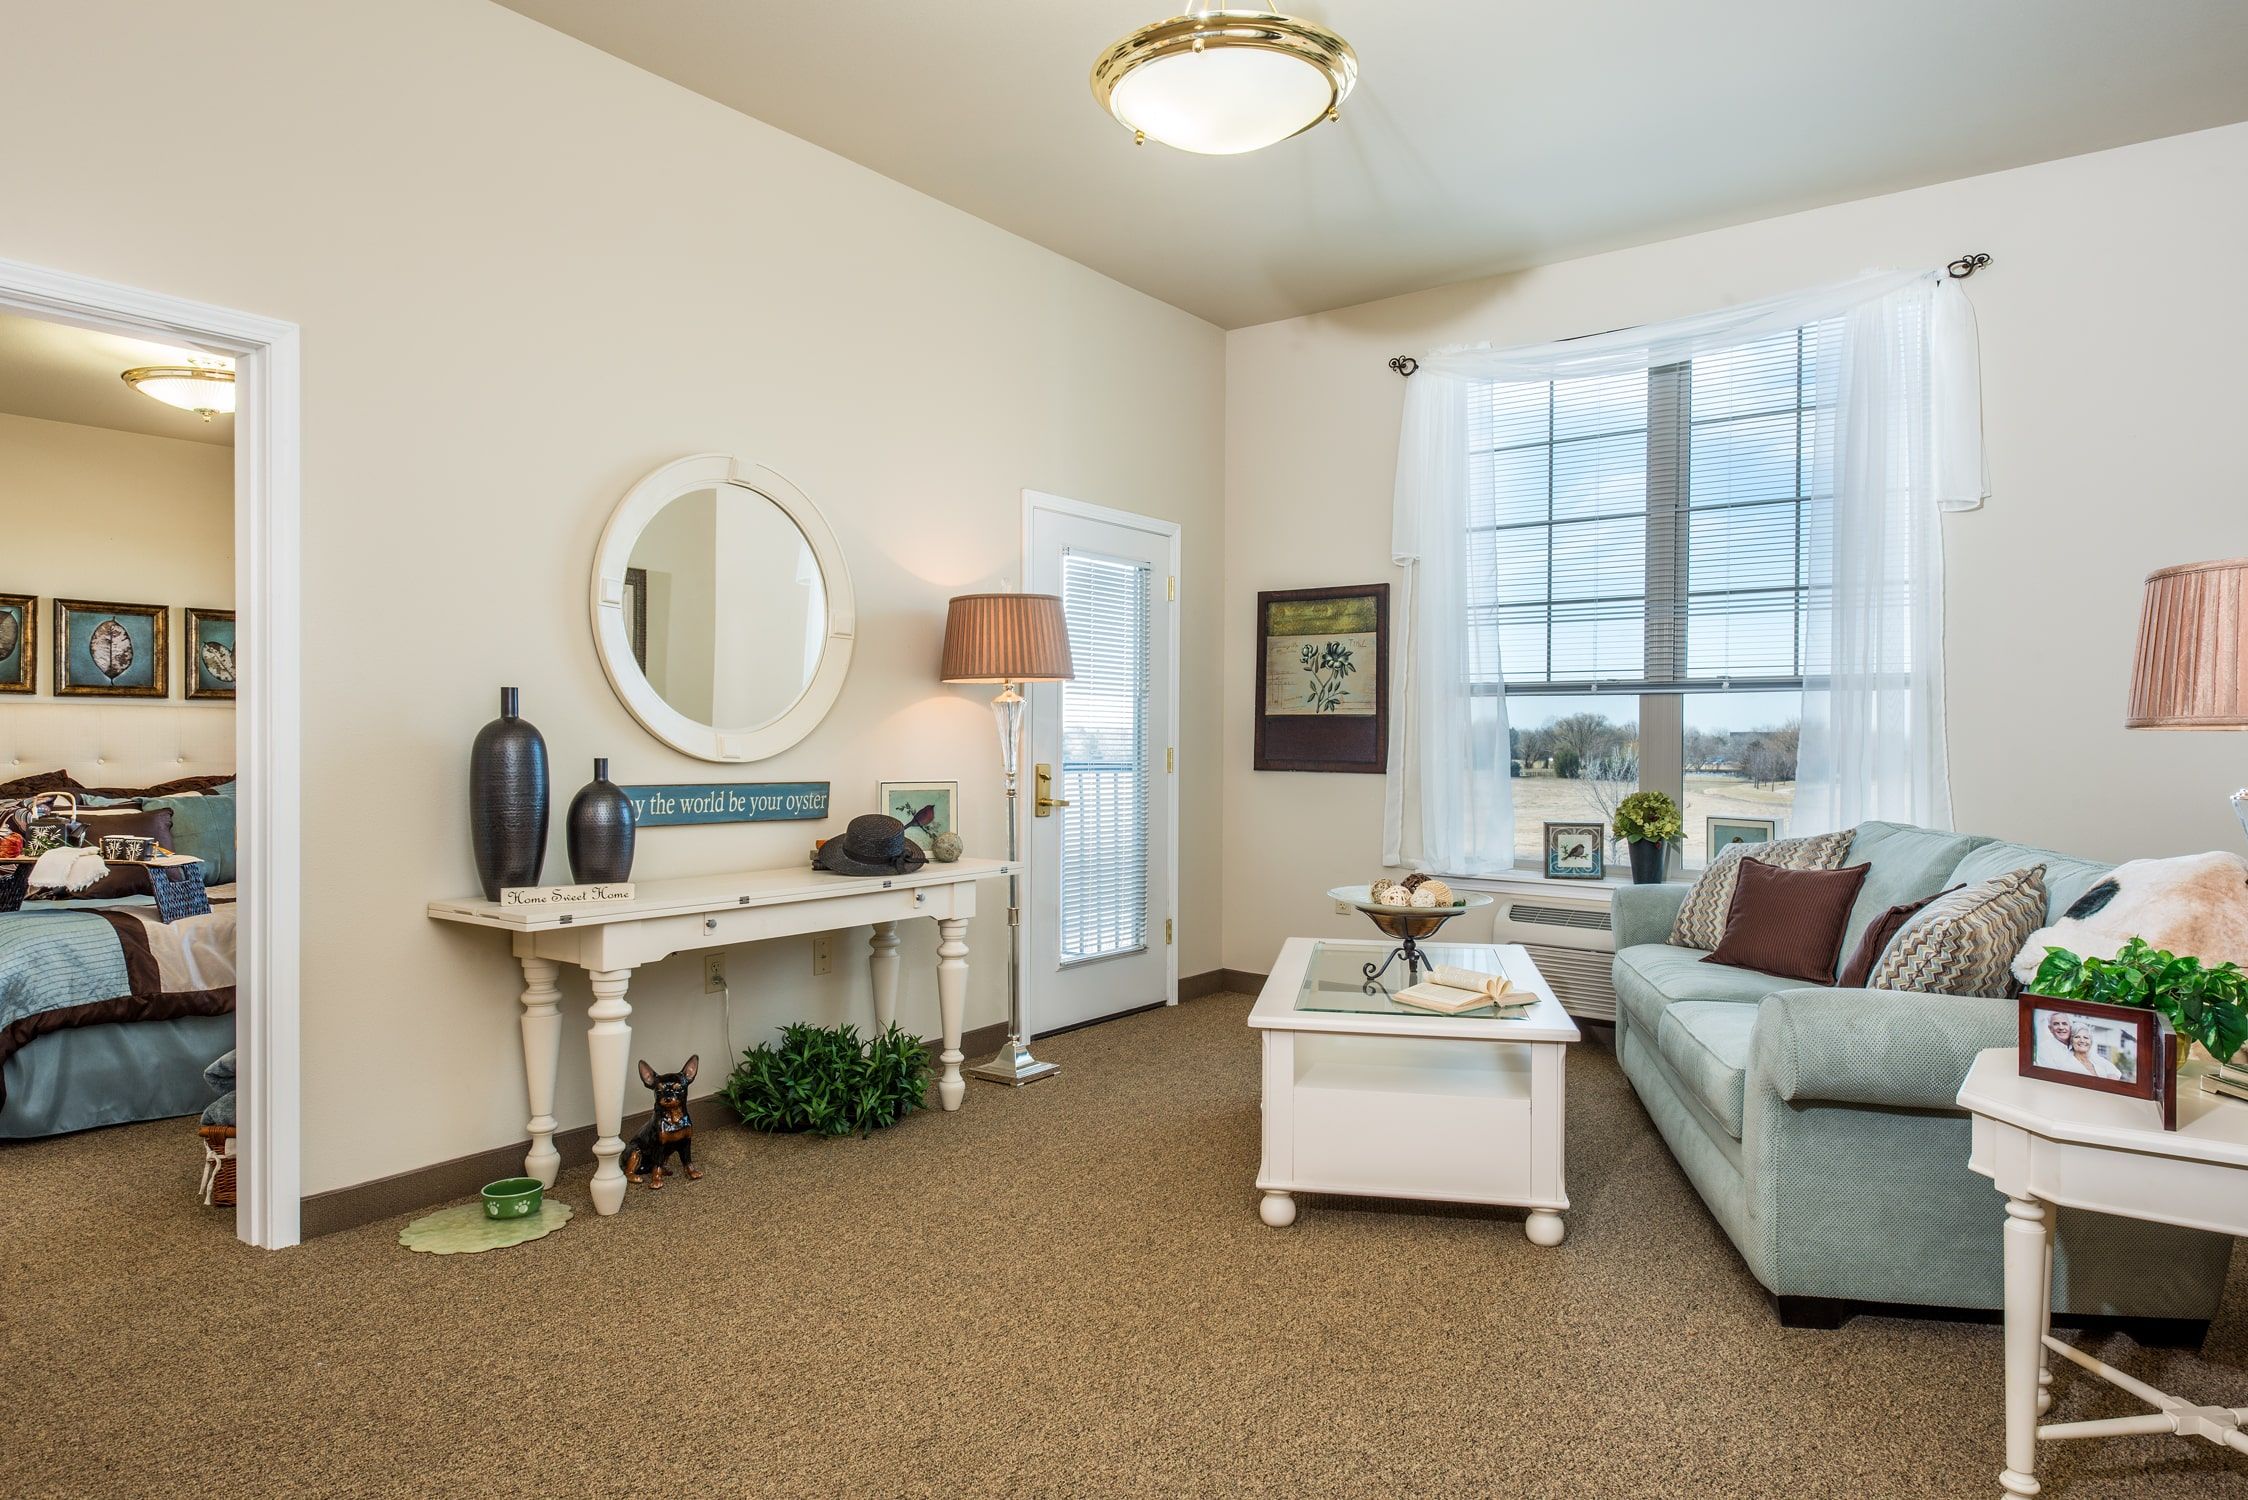 Interior view of MorningStar senior living community in Boise featuring elegant decor and furniture.